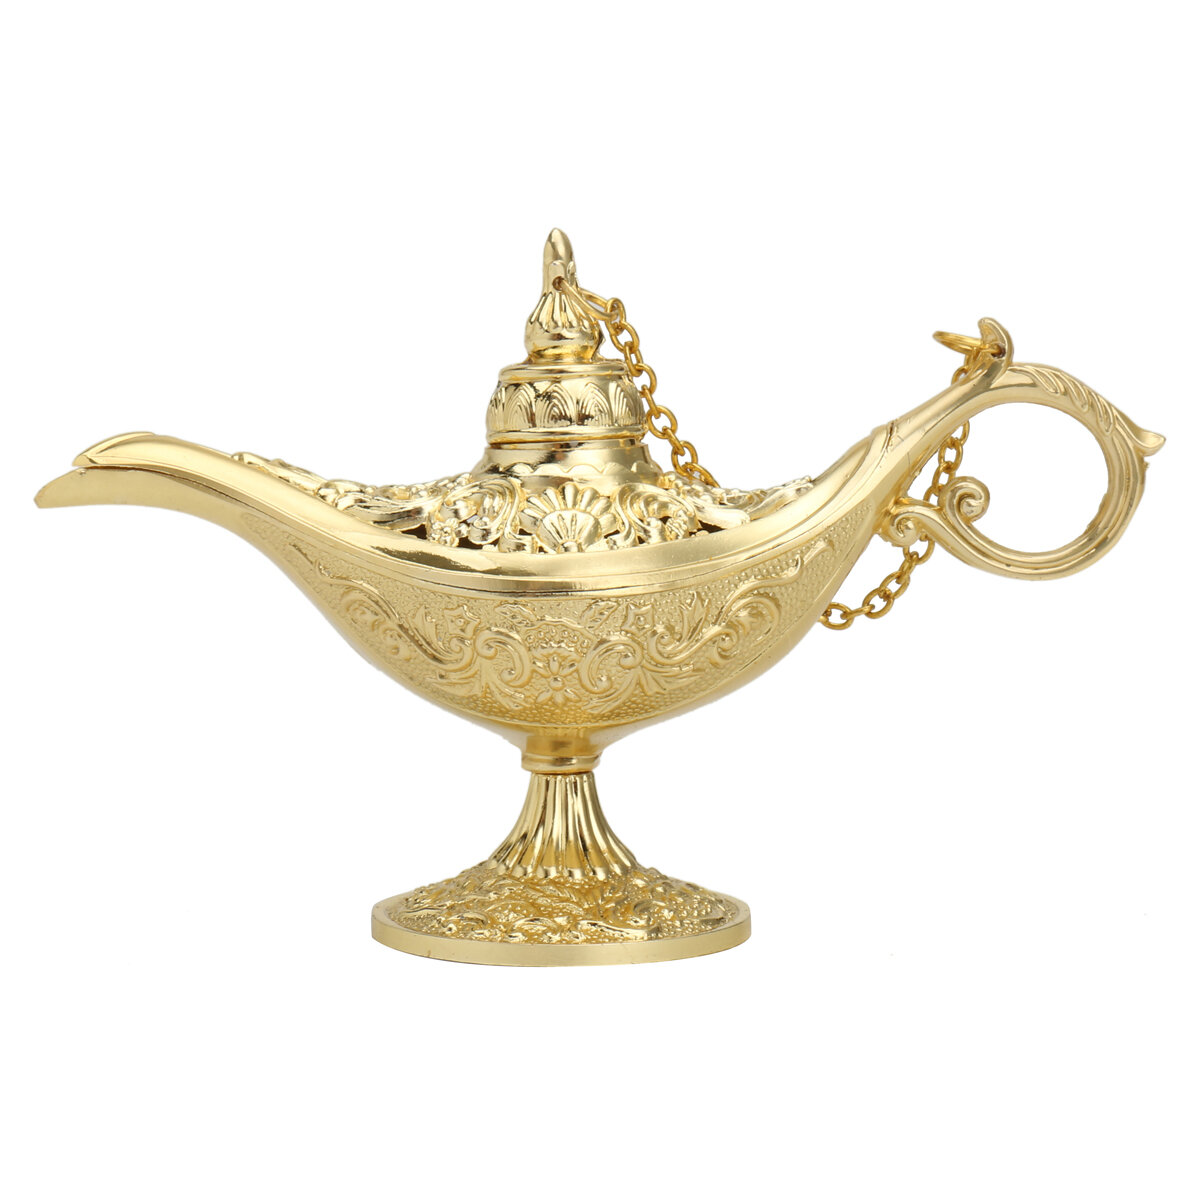 Vintage Metal Aladin Lamp Magical Aladdin's Genie Lamp Zinc Alloy Table Decoration Classic Arabian Costume Props Lamp Fo